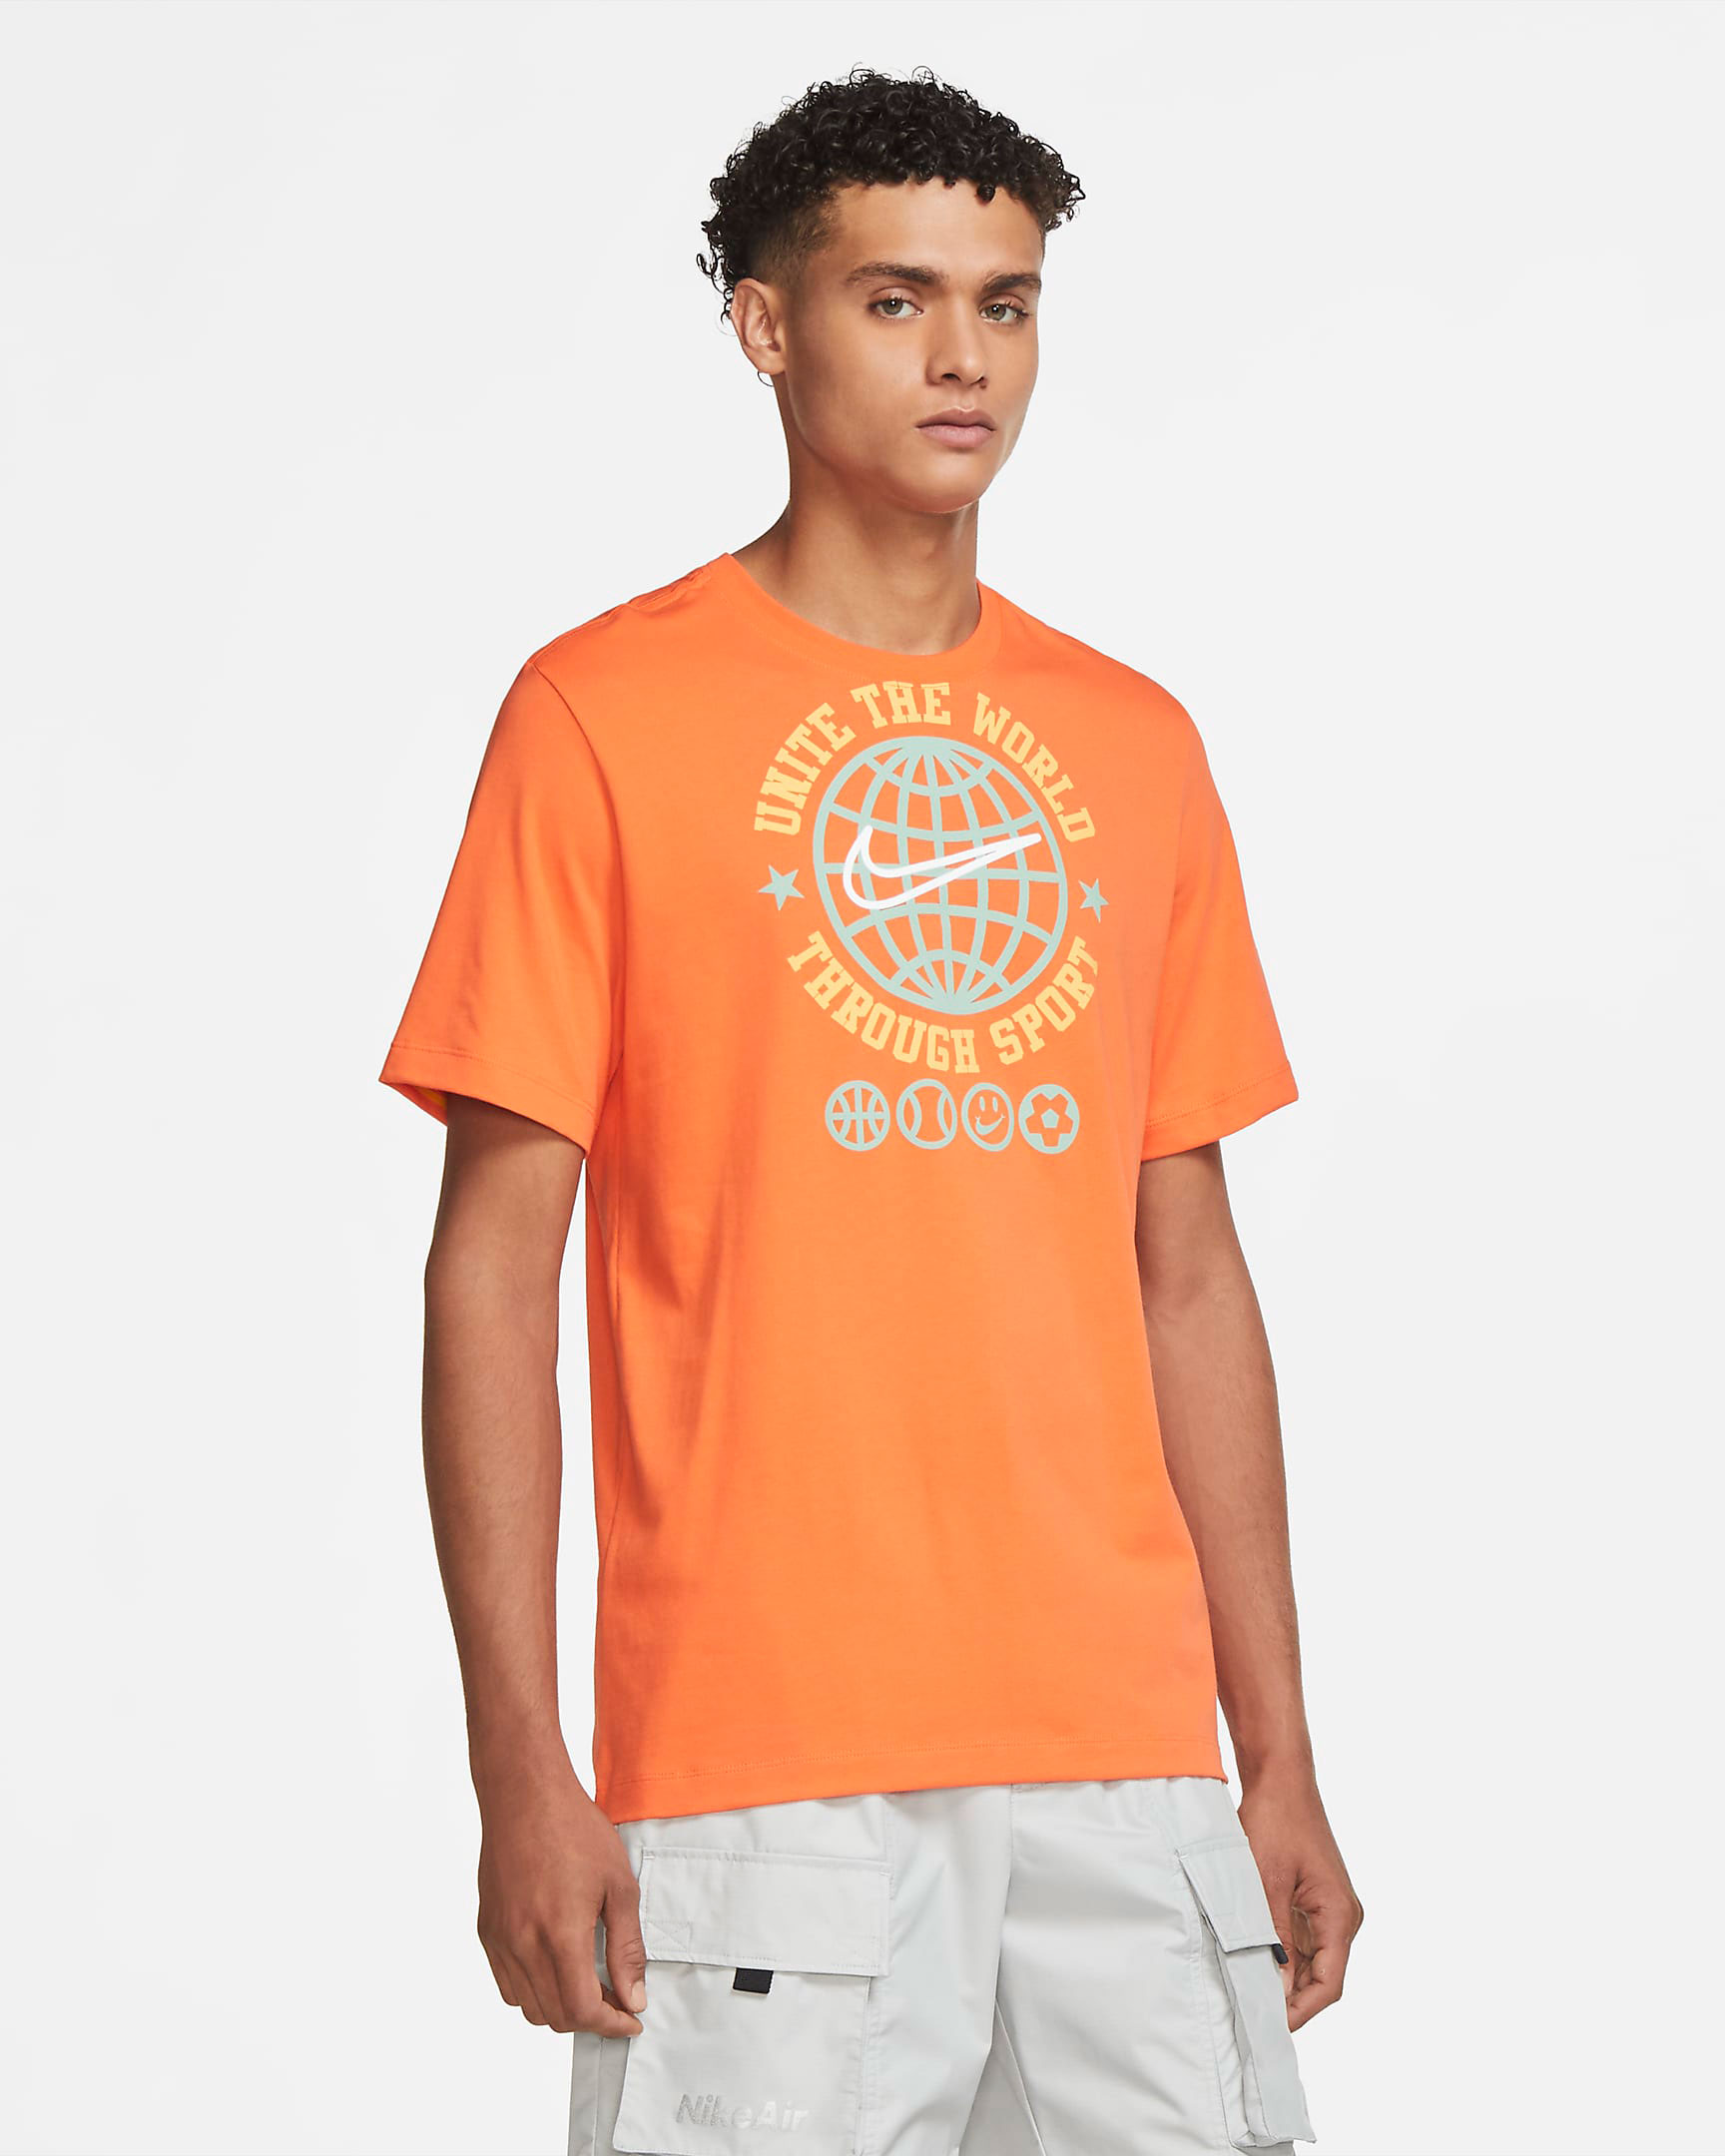 nike-sportswear-be-kind-orange-shirt-1